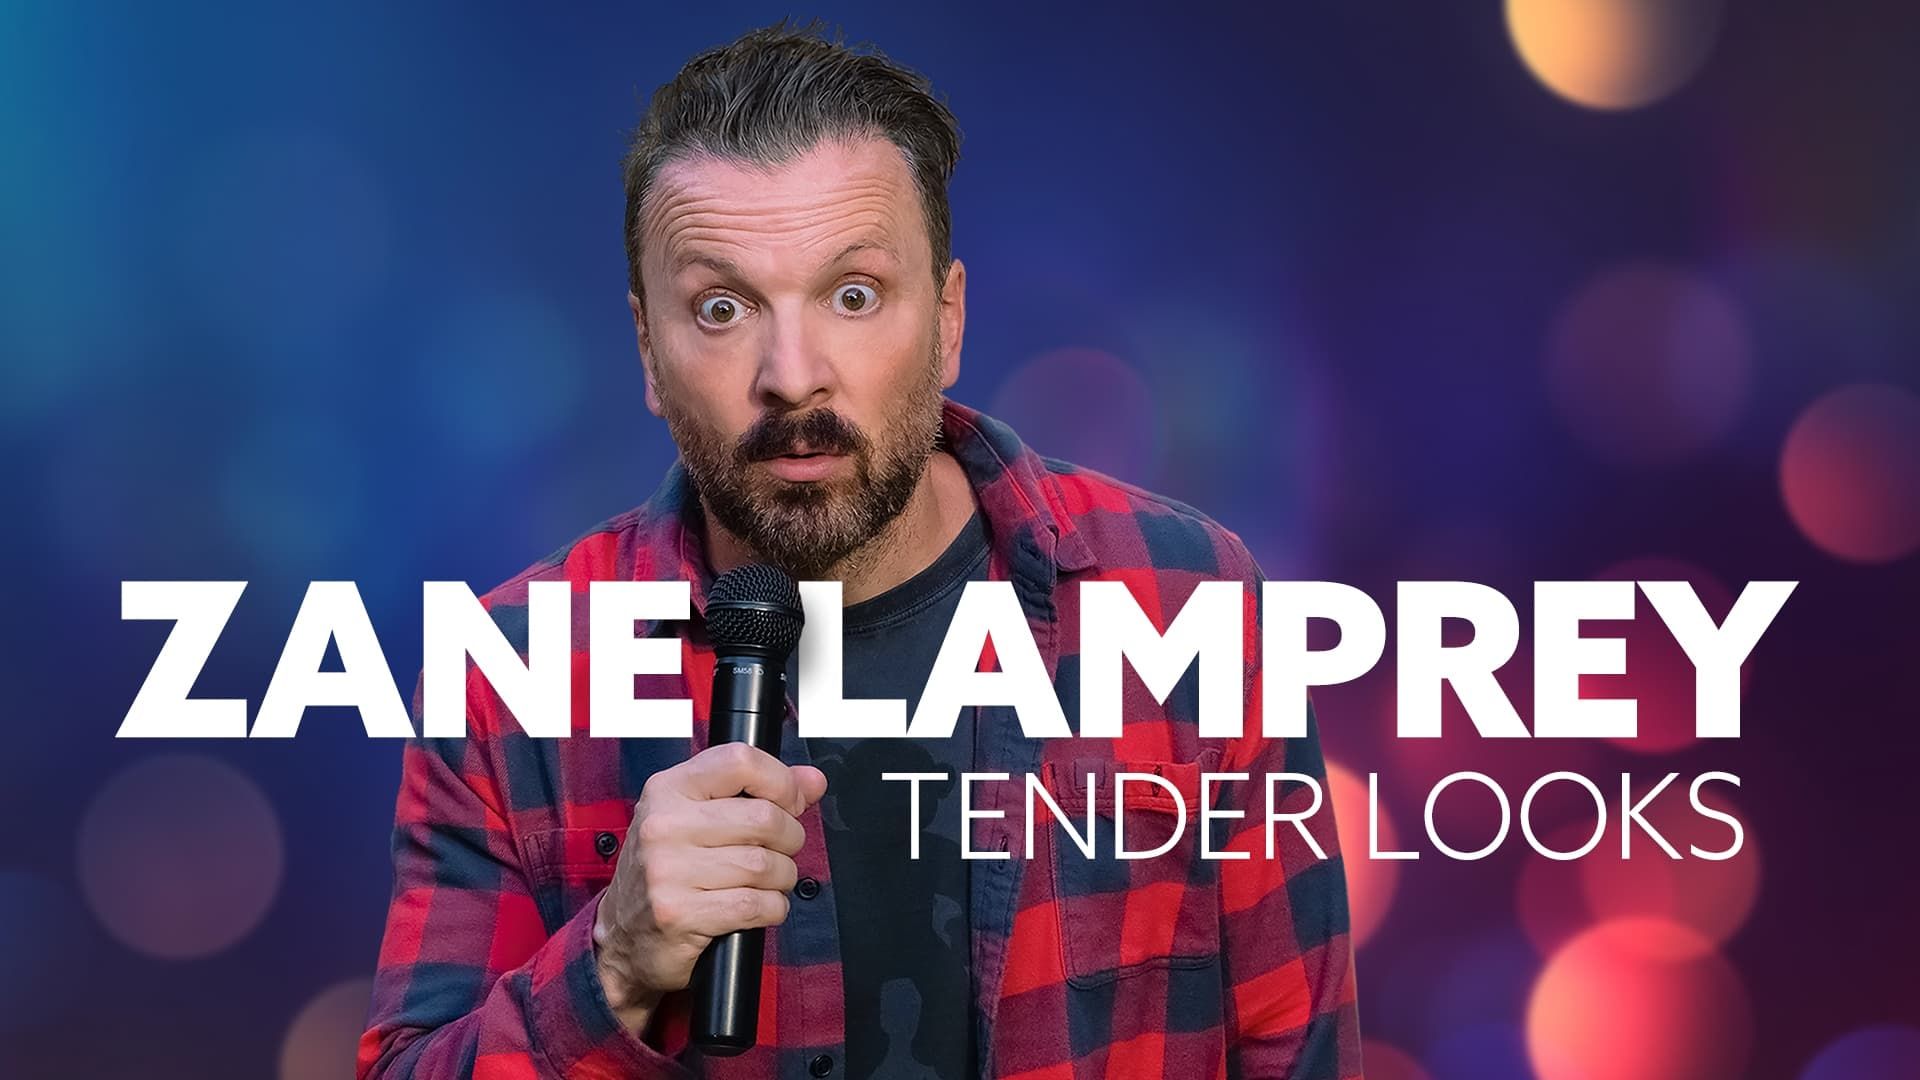 Zane Lamprey: Tender Looks background